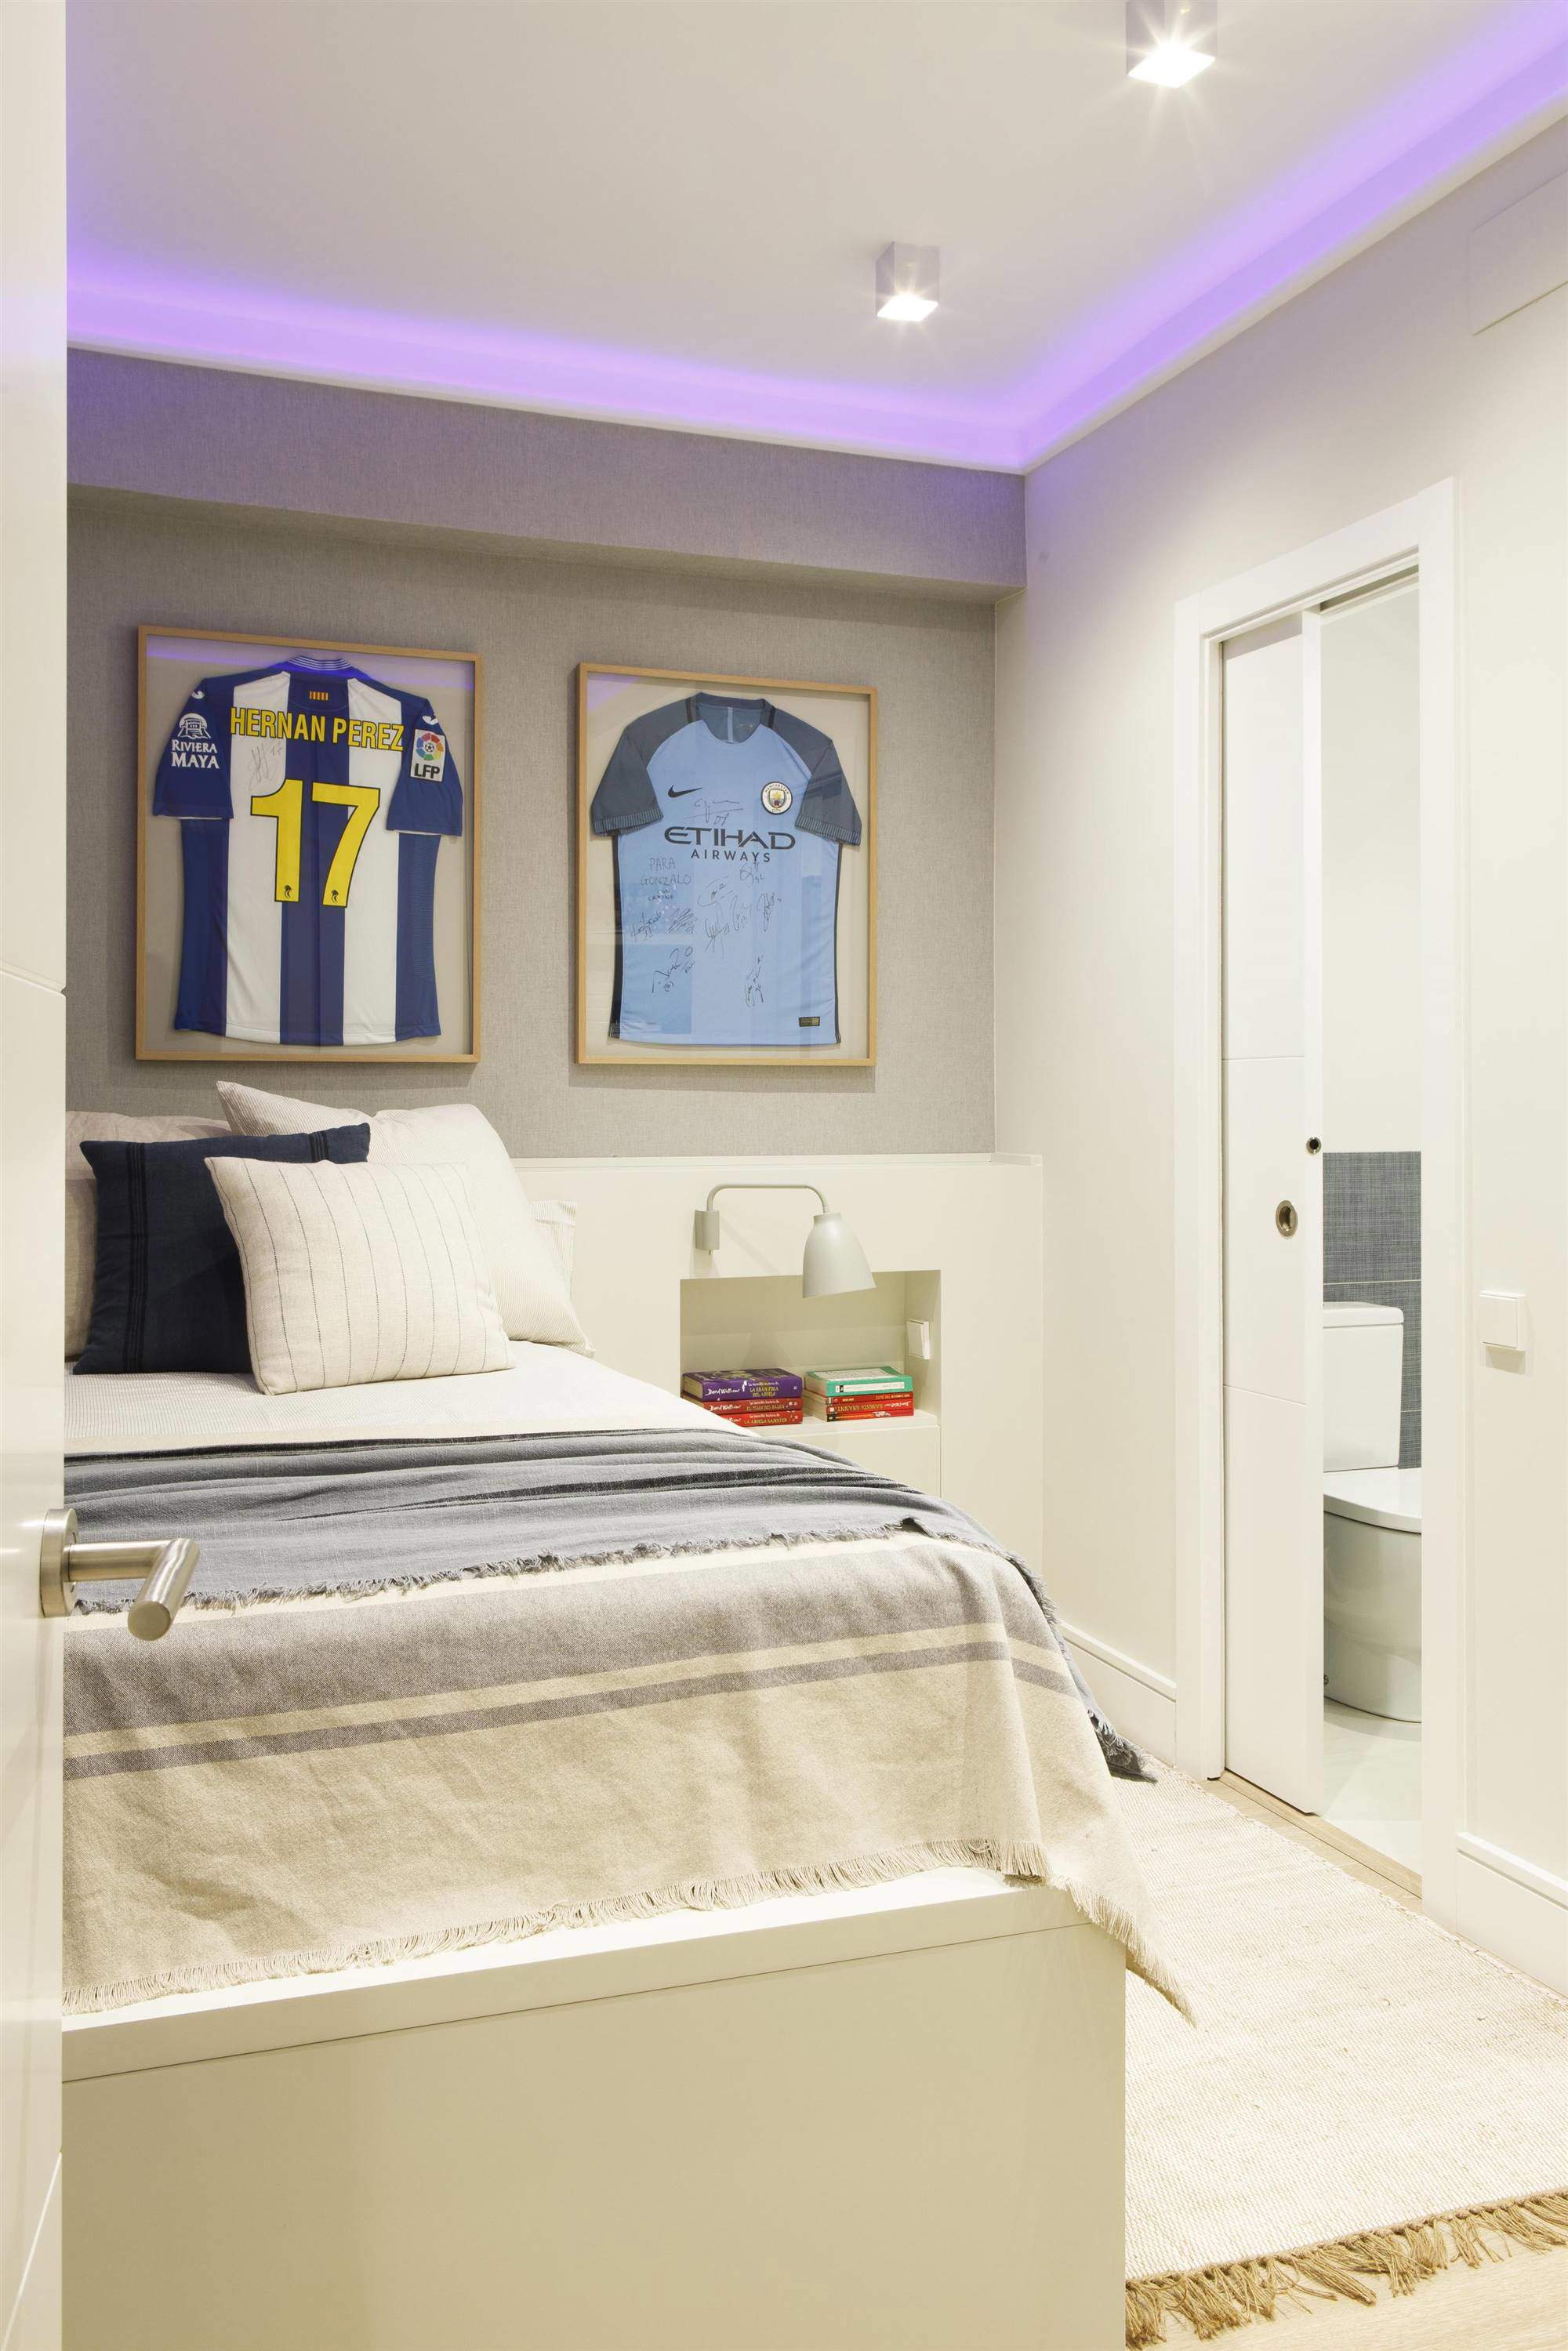 Dormitorio juvenil masculino con bañen suite, proyecto de la interiorista Pia Capdevila.